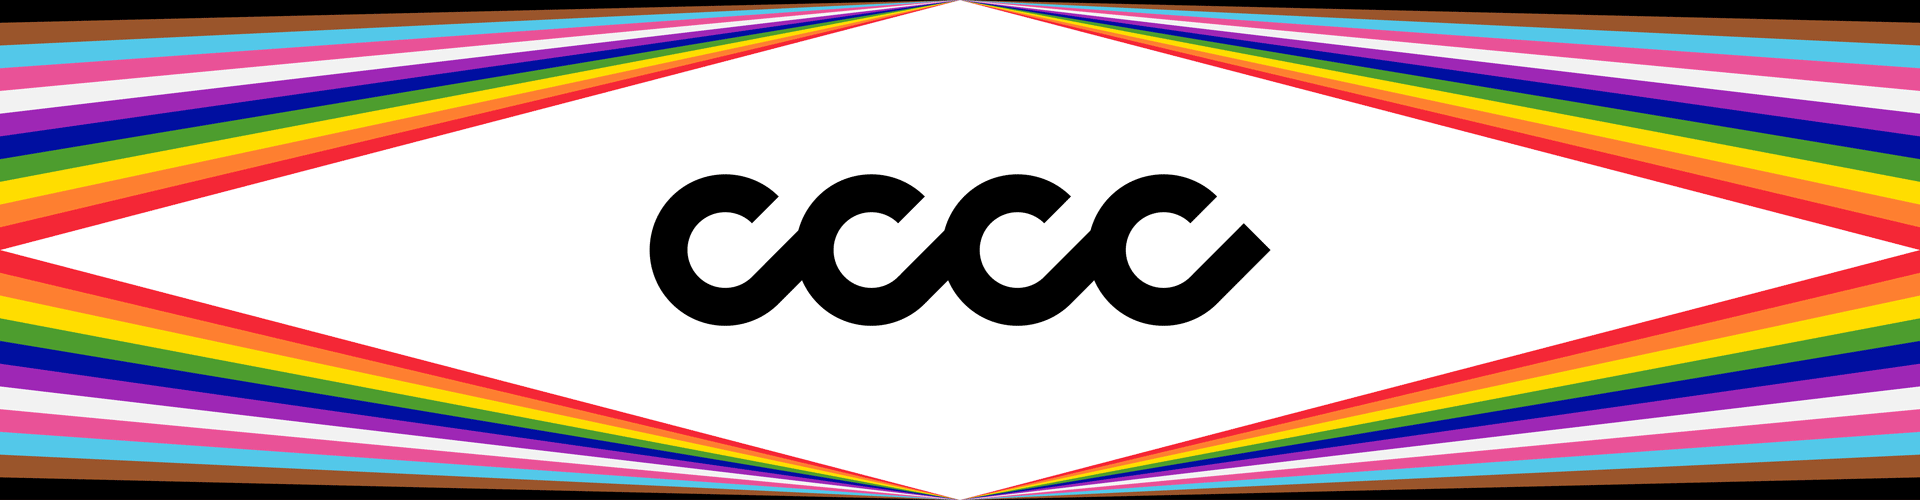 banner-web-cccc